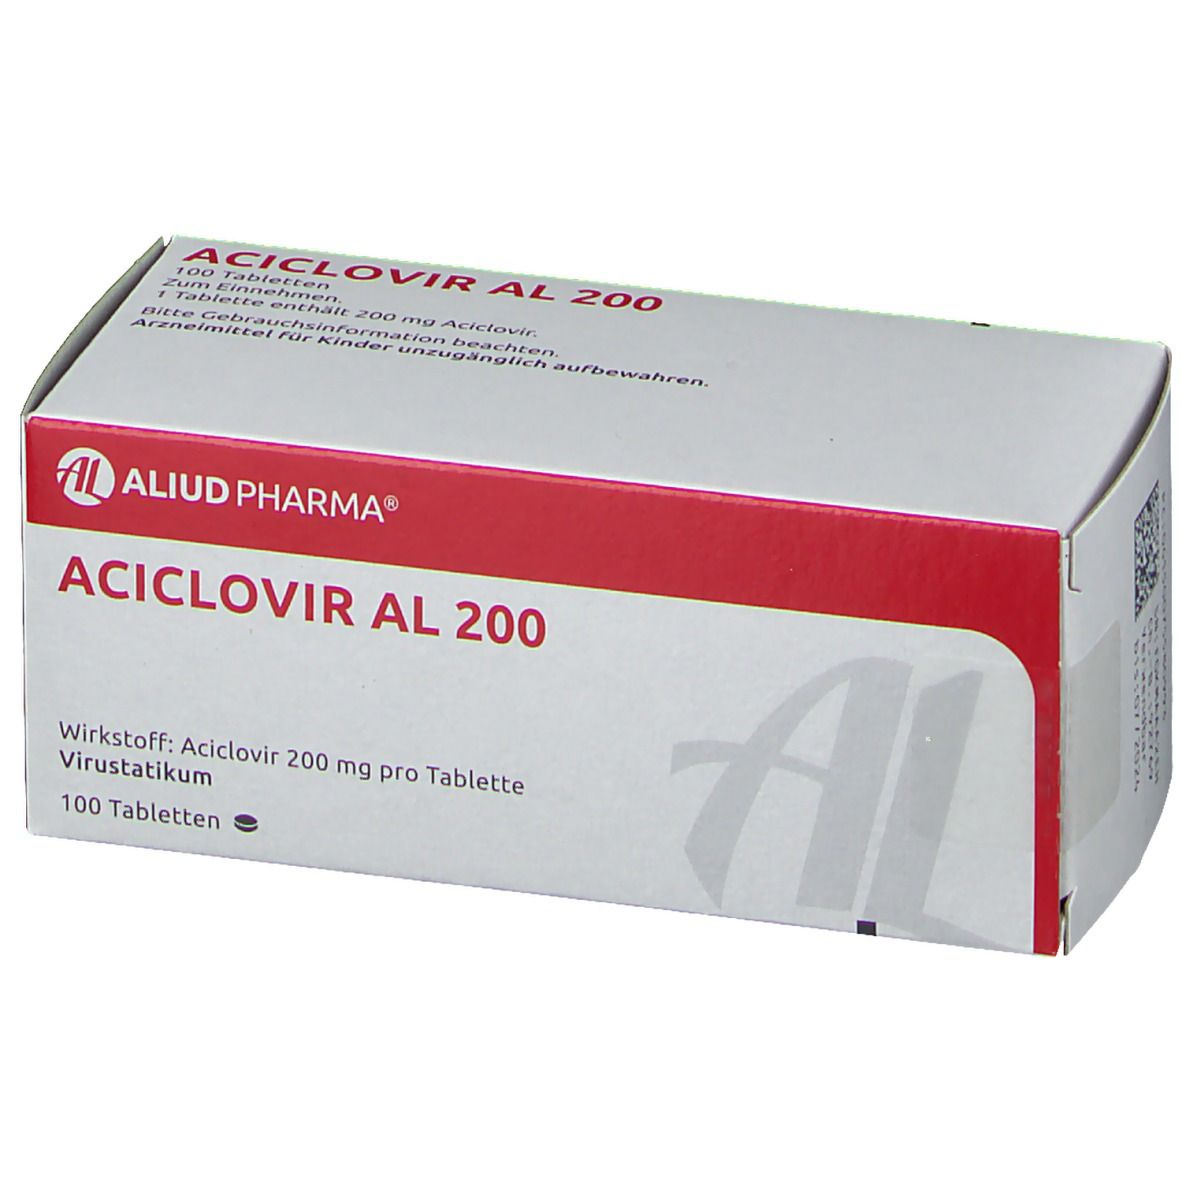 Aciclovir AL 200